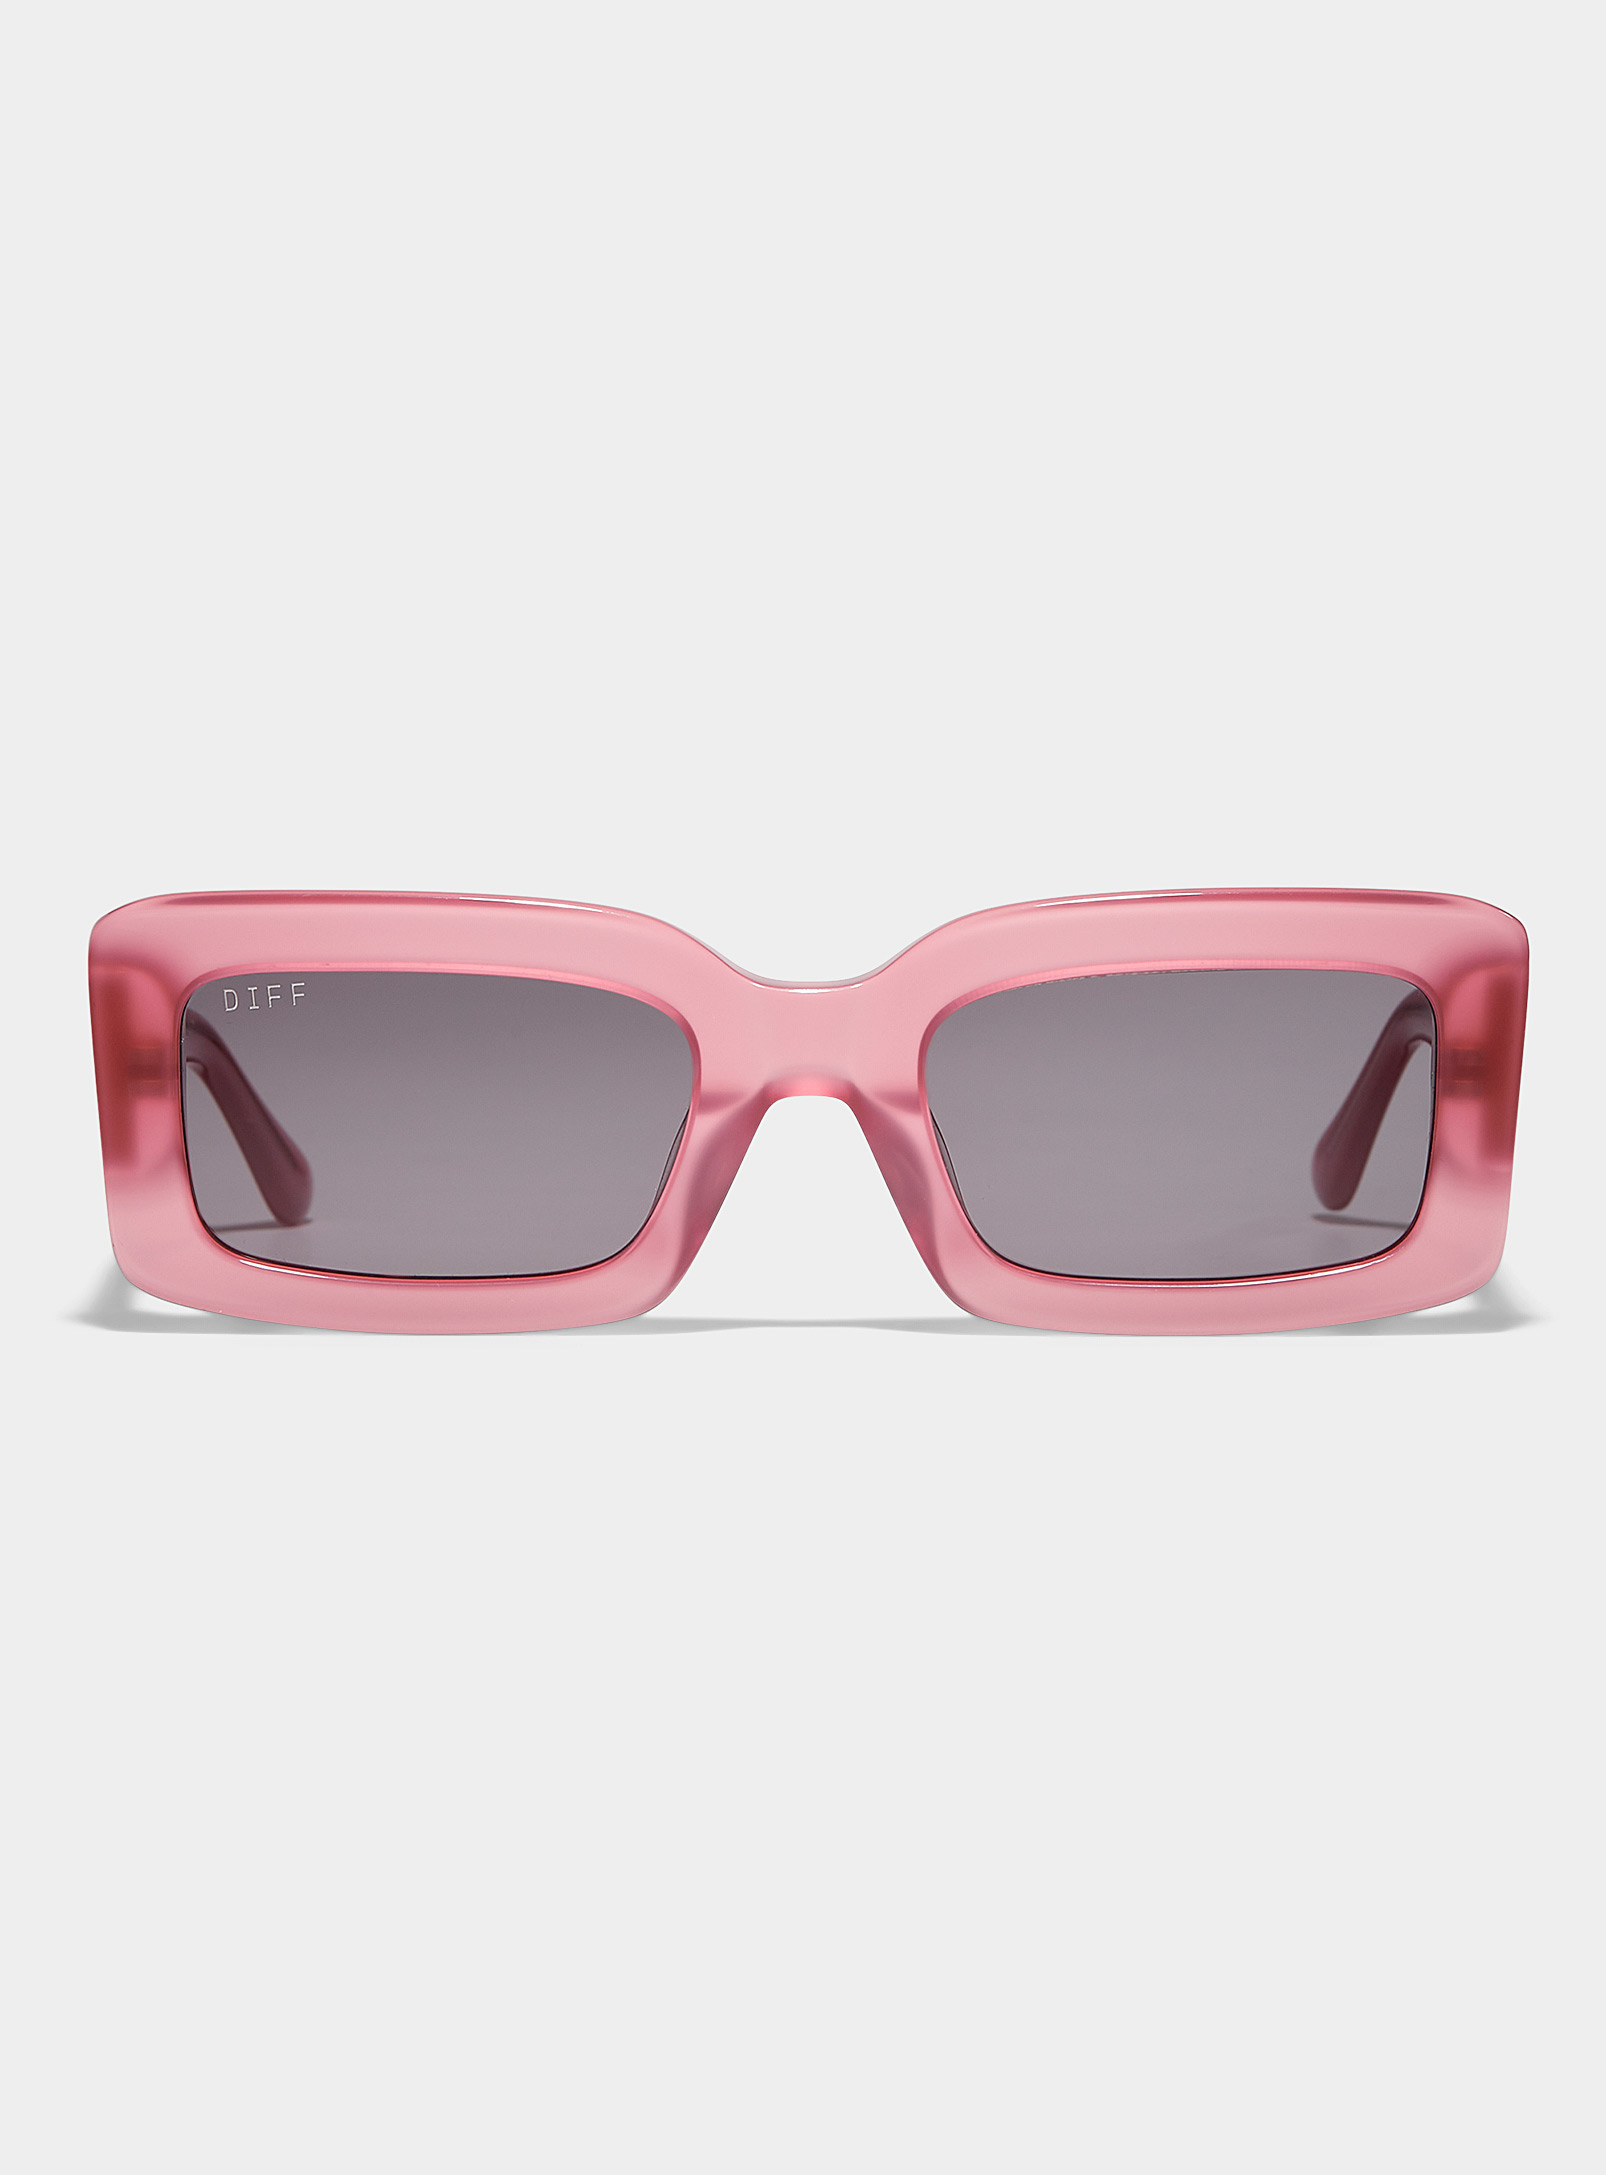 DIFF - Women's Indy rectangular sunglasses